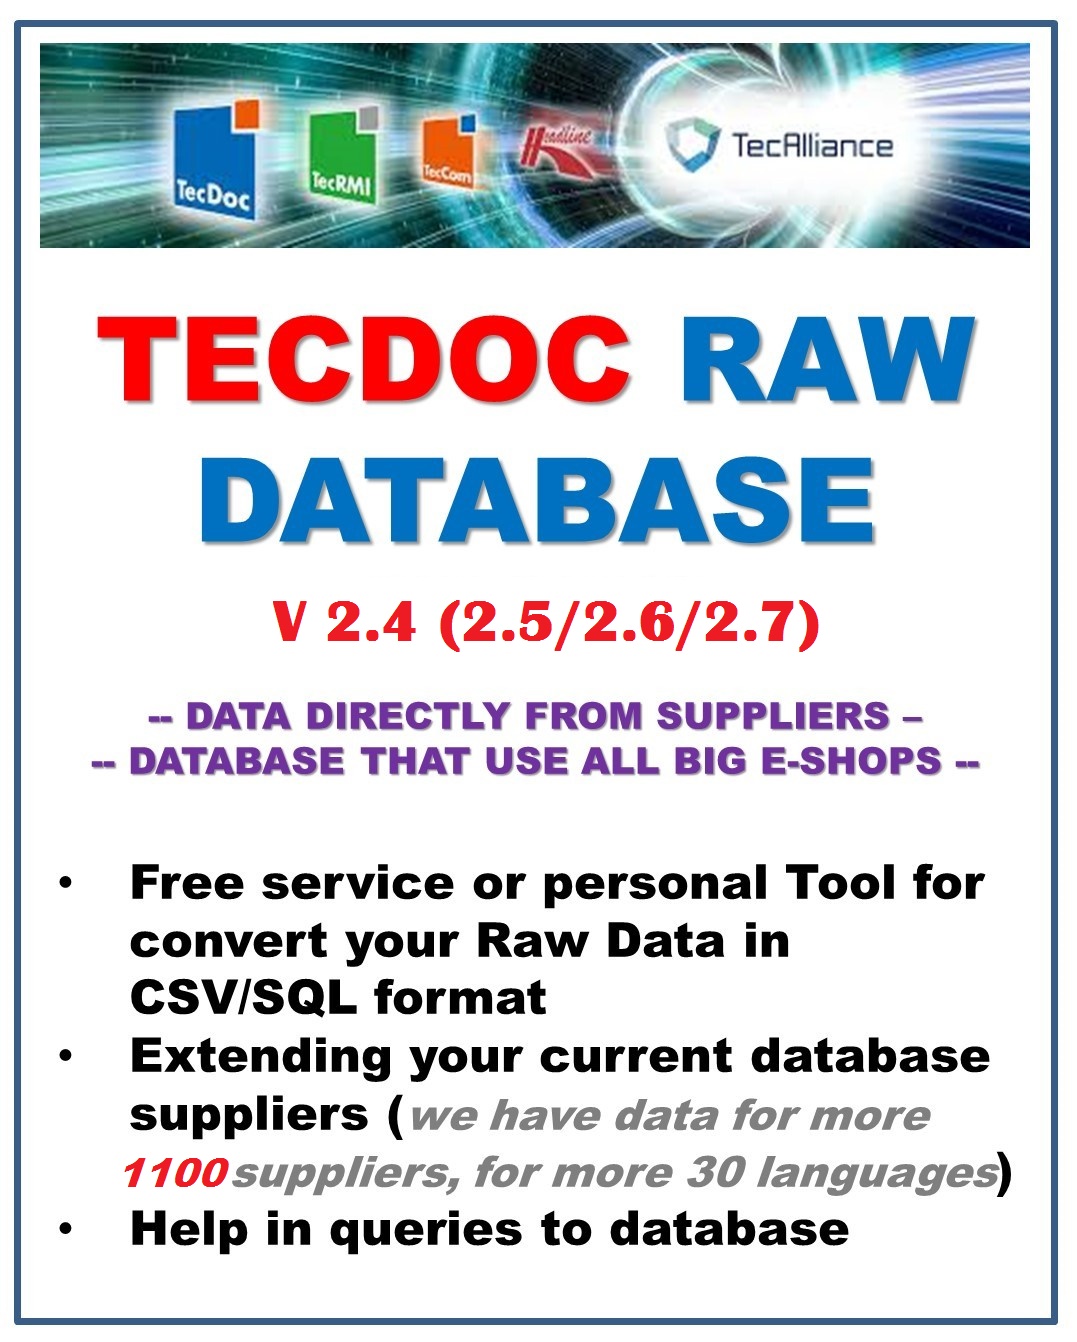 Tecdoc TAF Raw database - READY DATA FOR MORE 1100 BRANDS